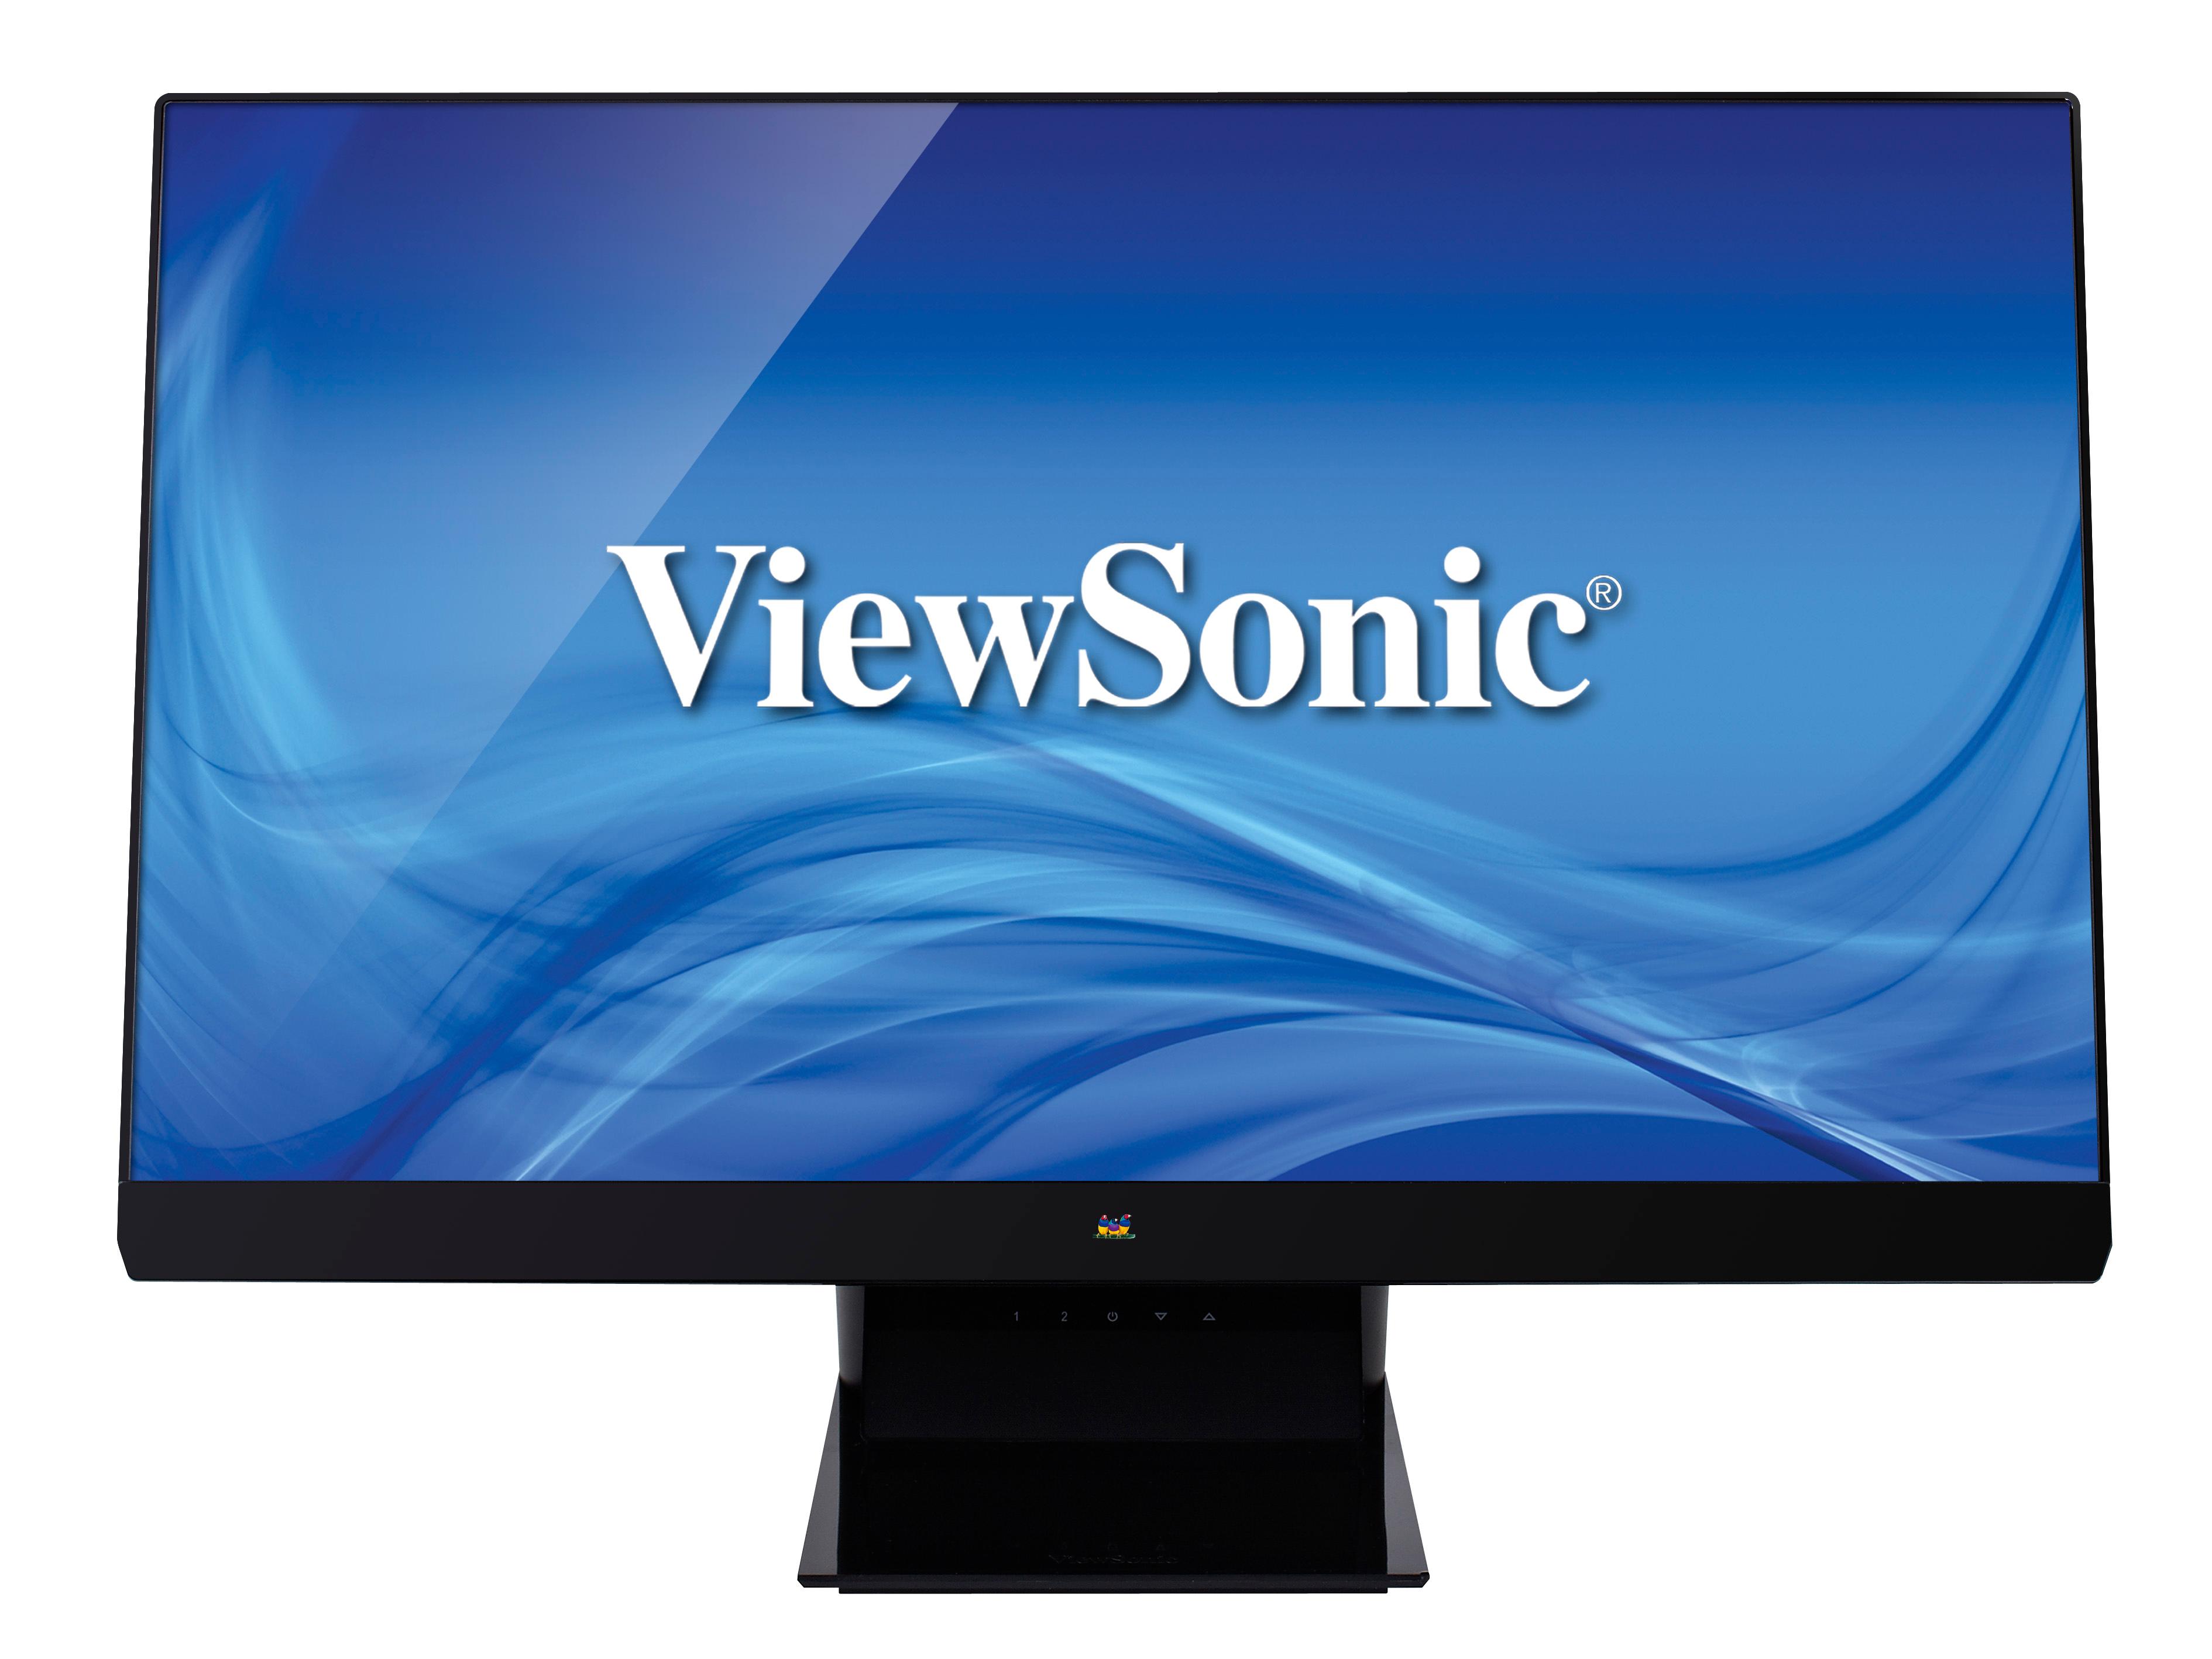 ViewSonic Luncurkan VX2770Sml-LED, Layar Full HD Frameless MHL 2.0